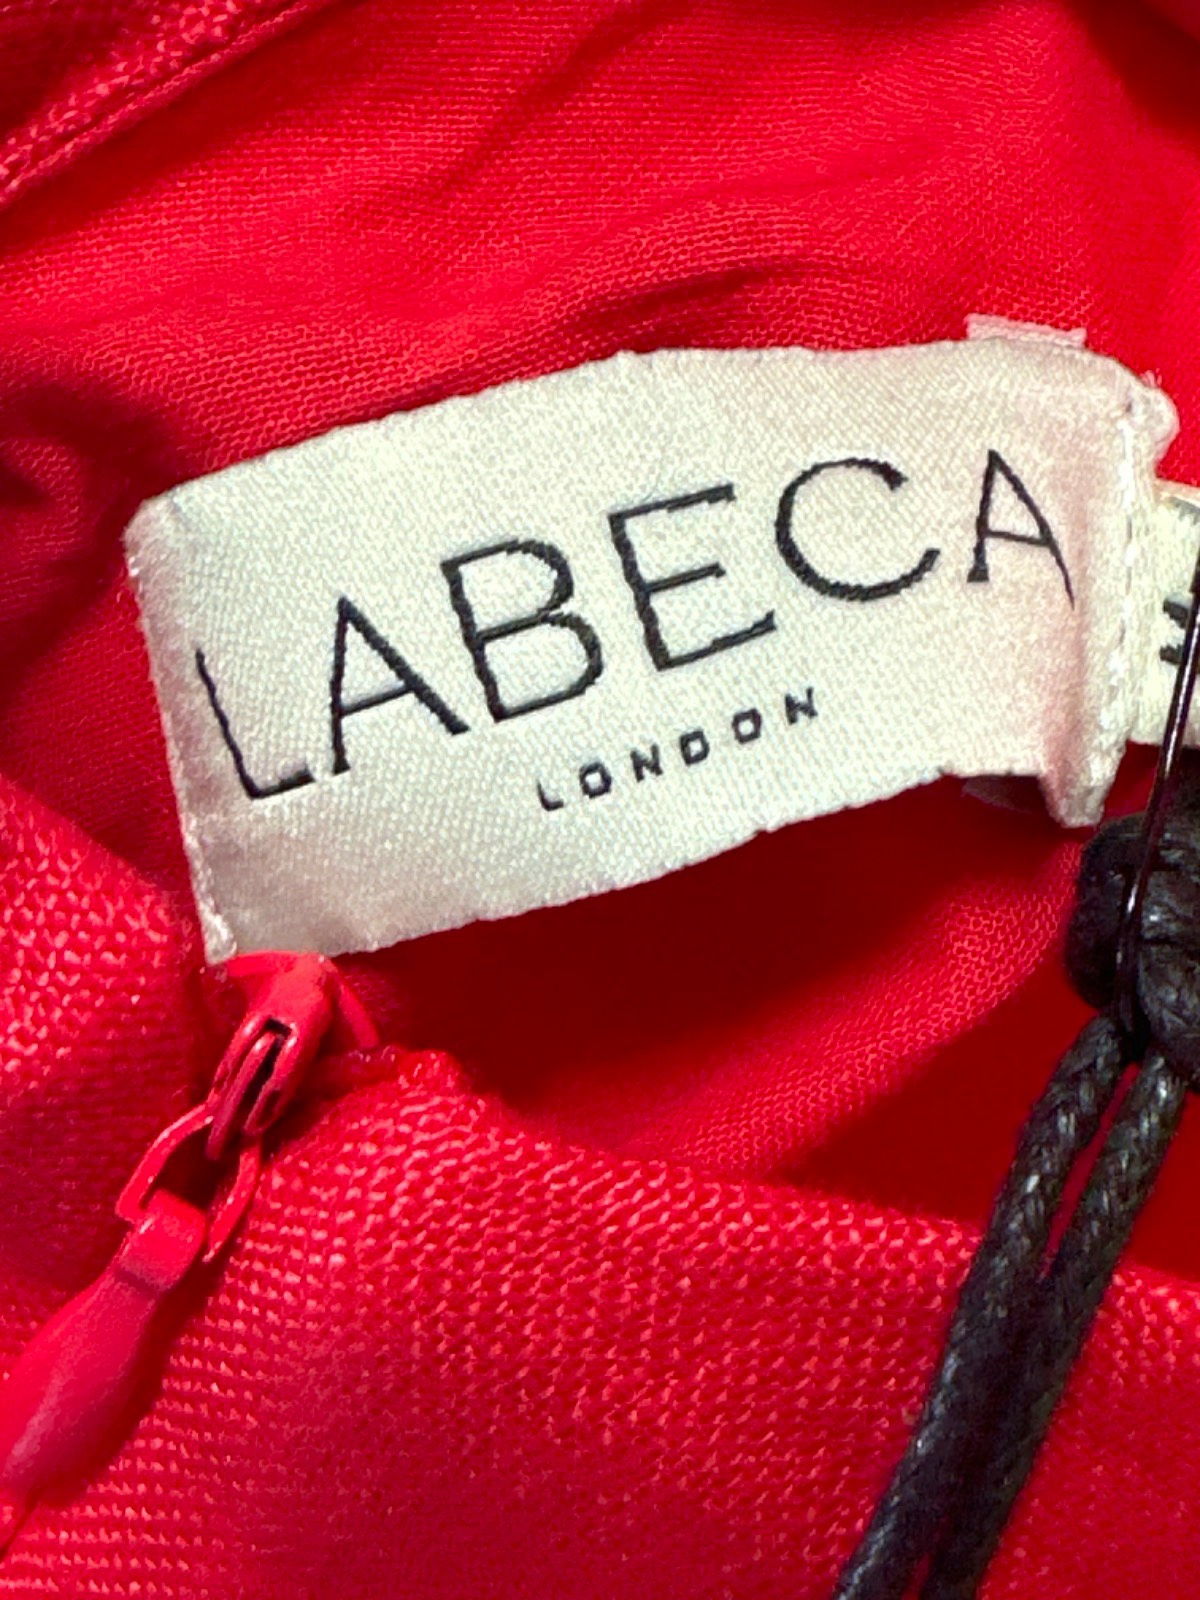 LABECA London Laura Goji Red Linen Halter Neck Dress UK M